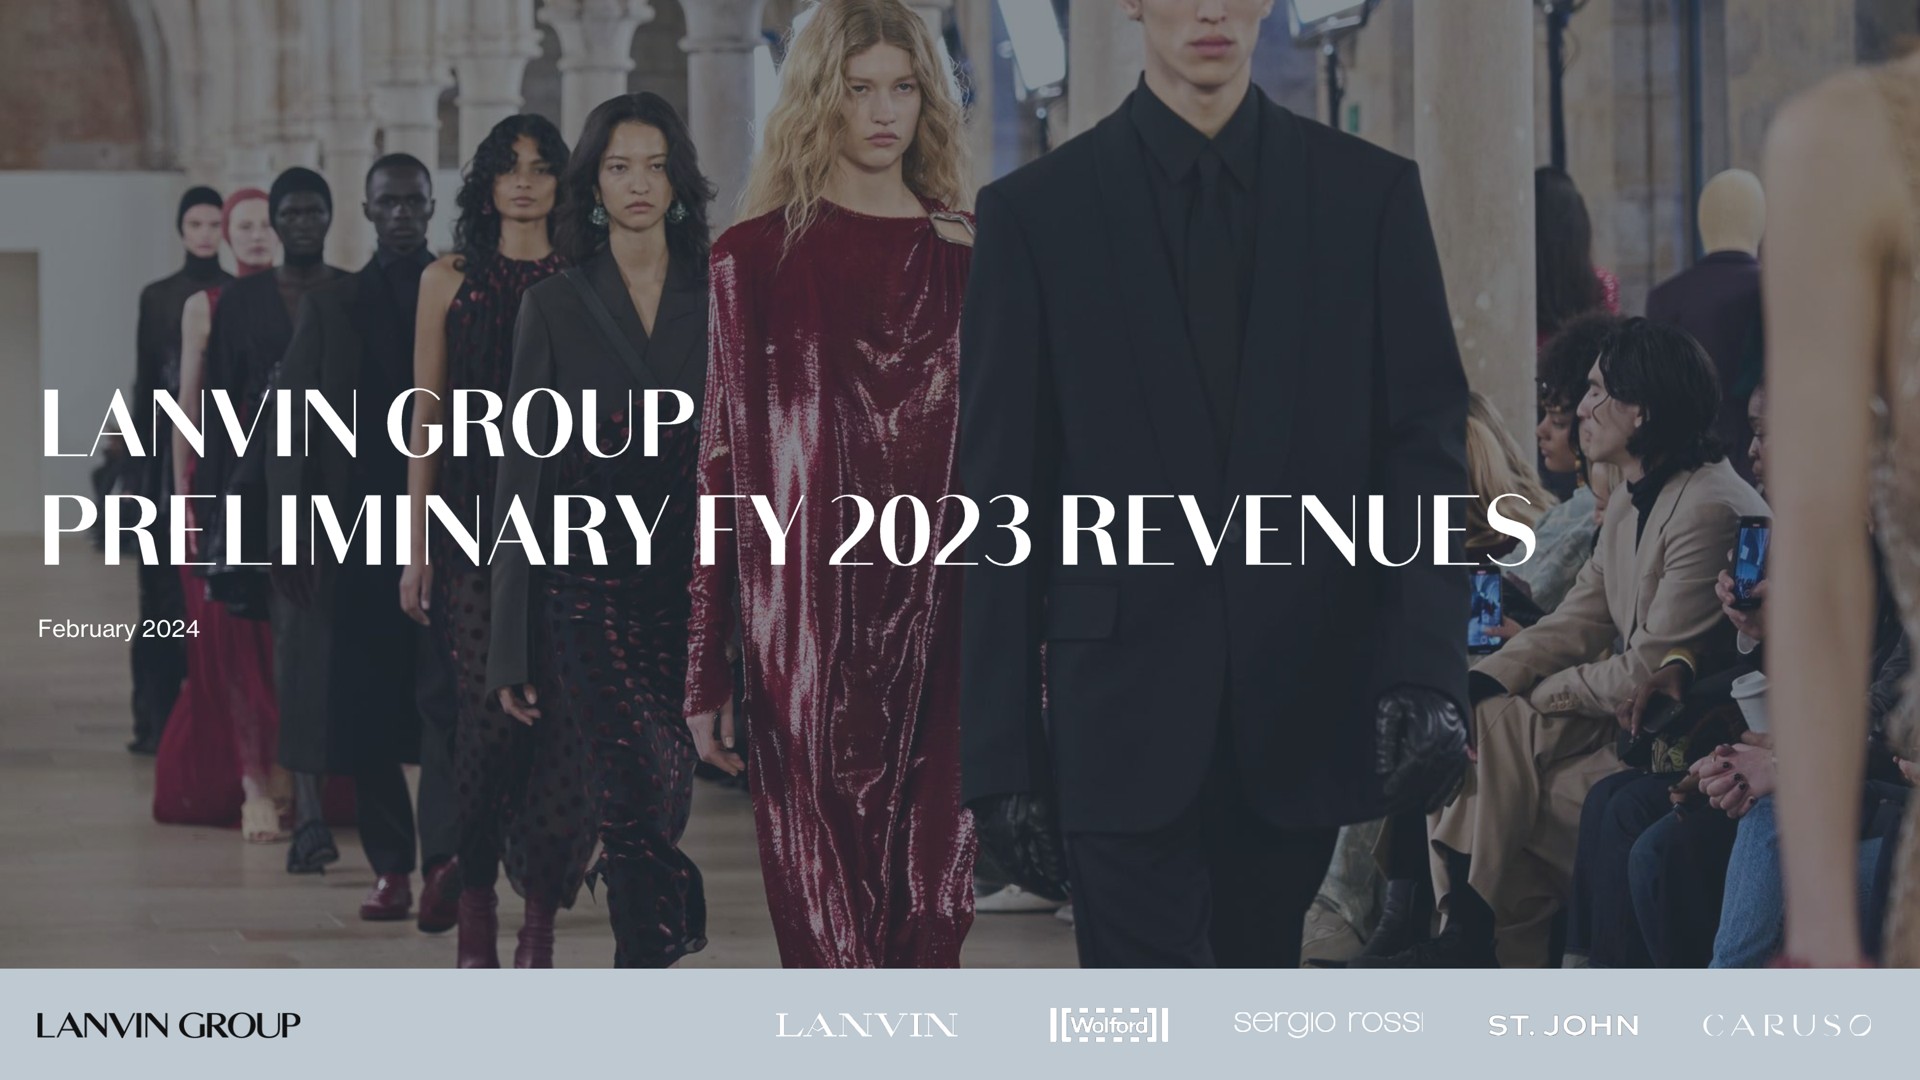 group preliminary revenues | Lanvin